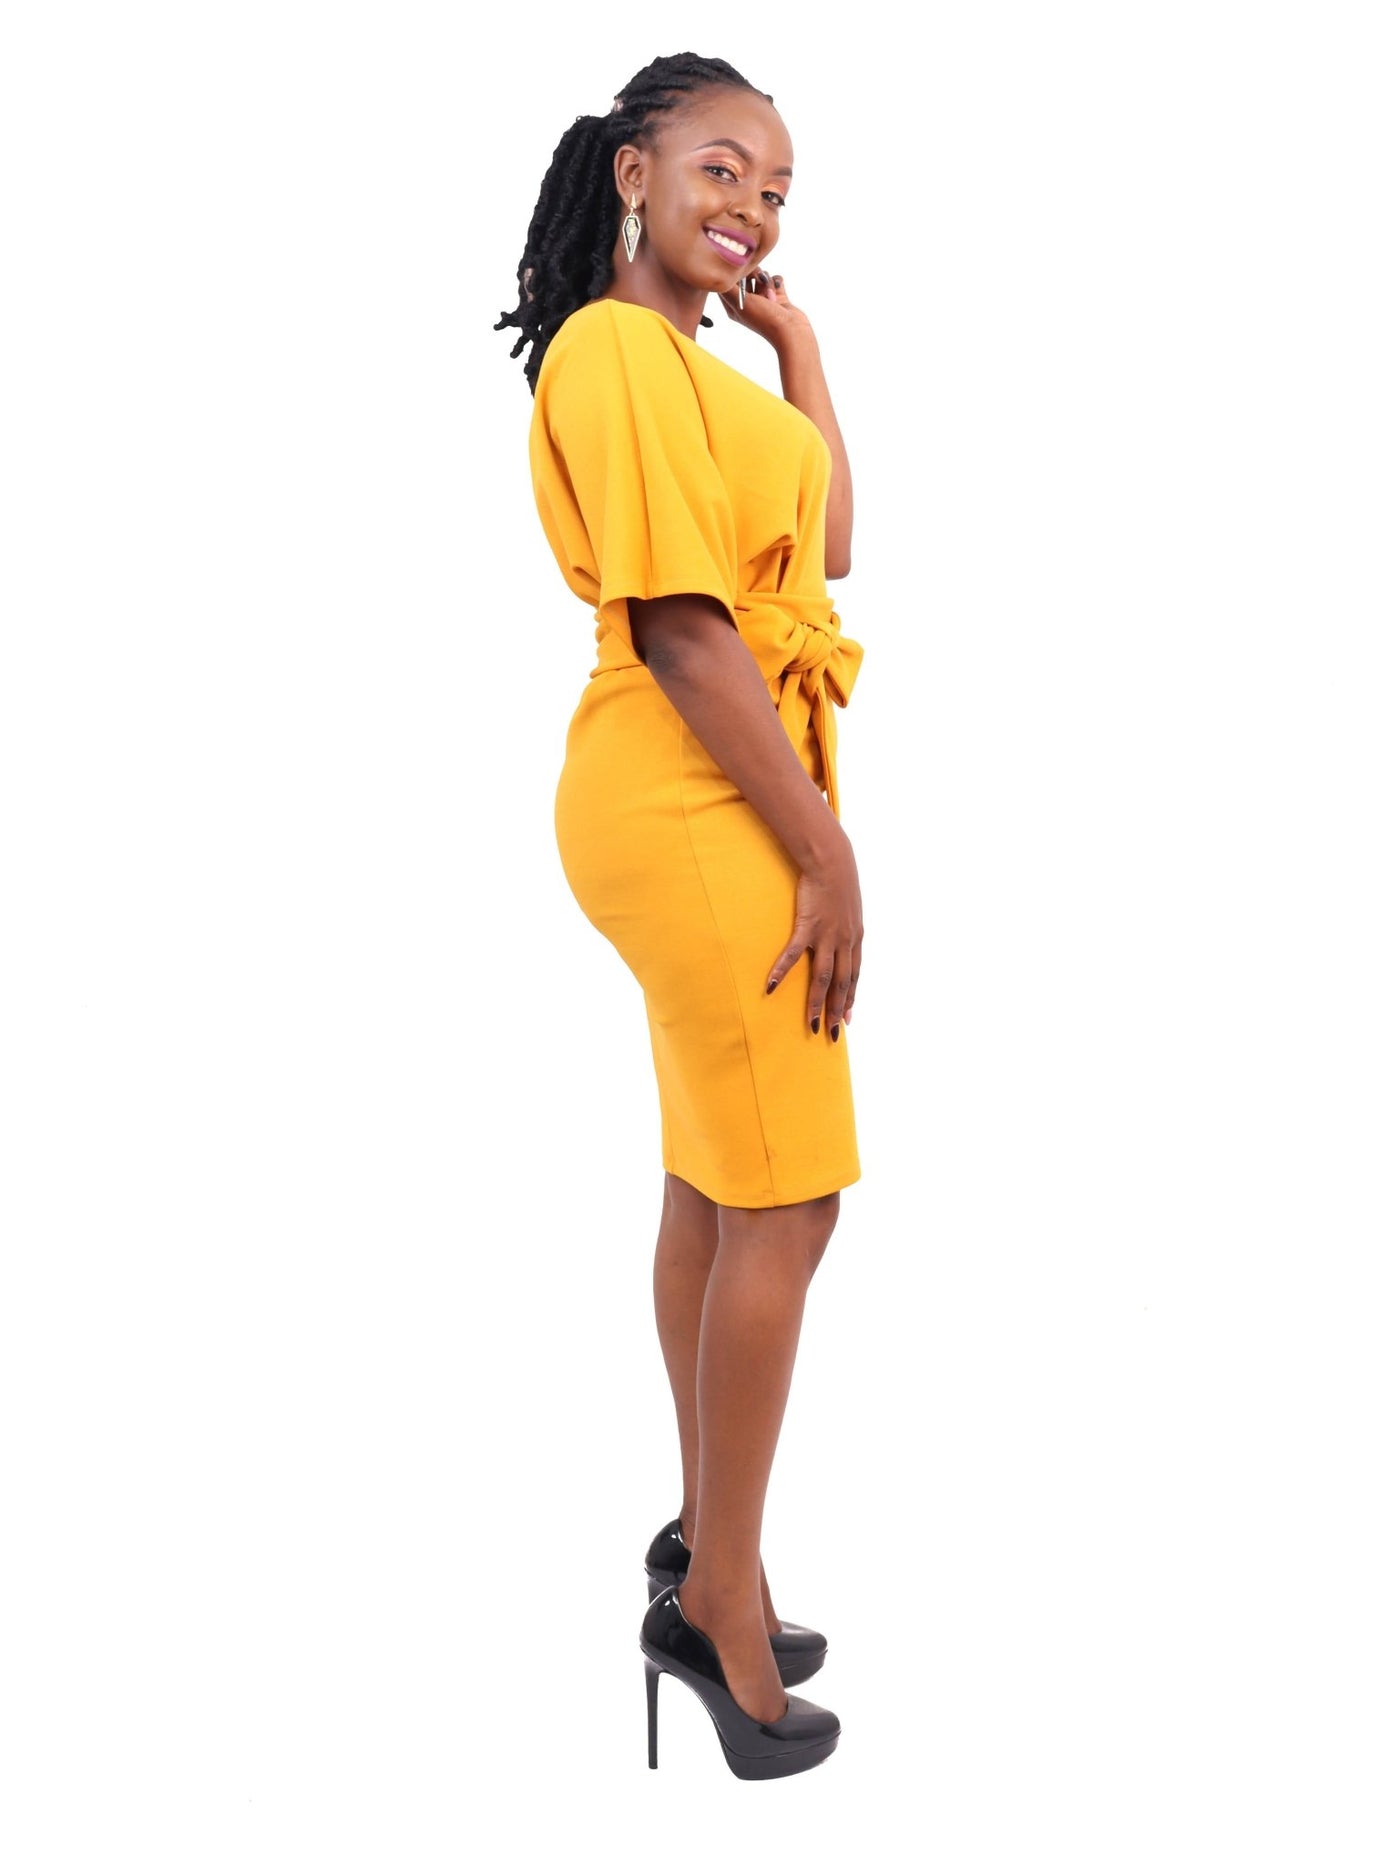 Aramay Rhyolite Knee Length Dress - Mustard - Shopzetu